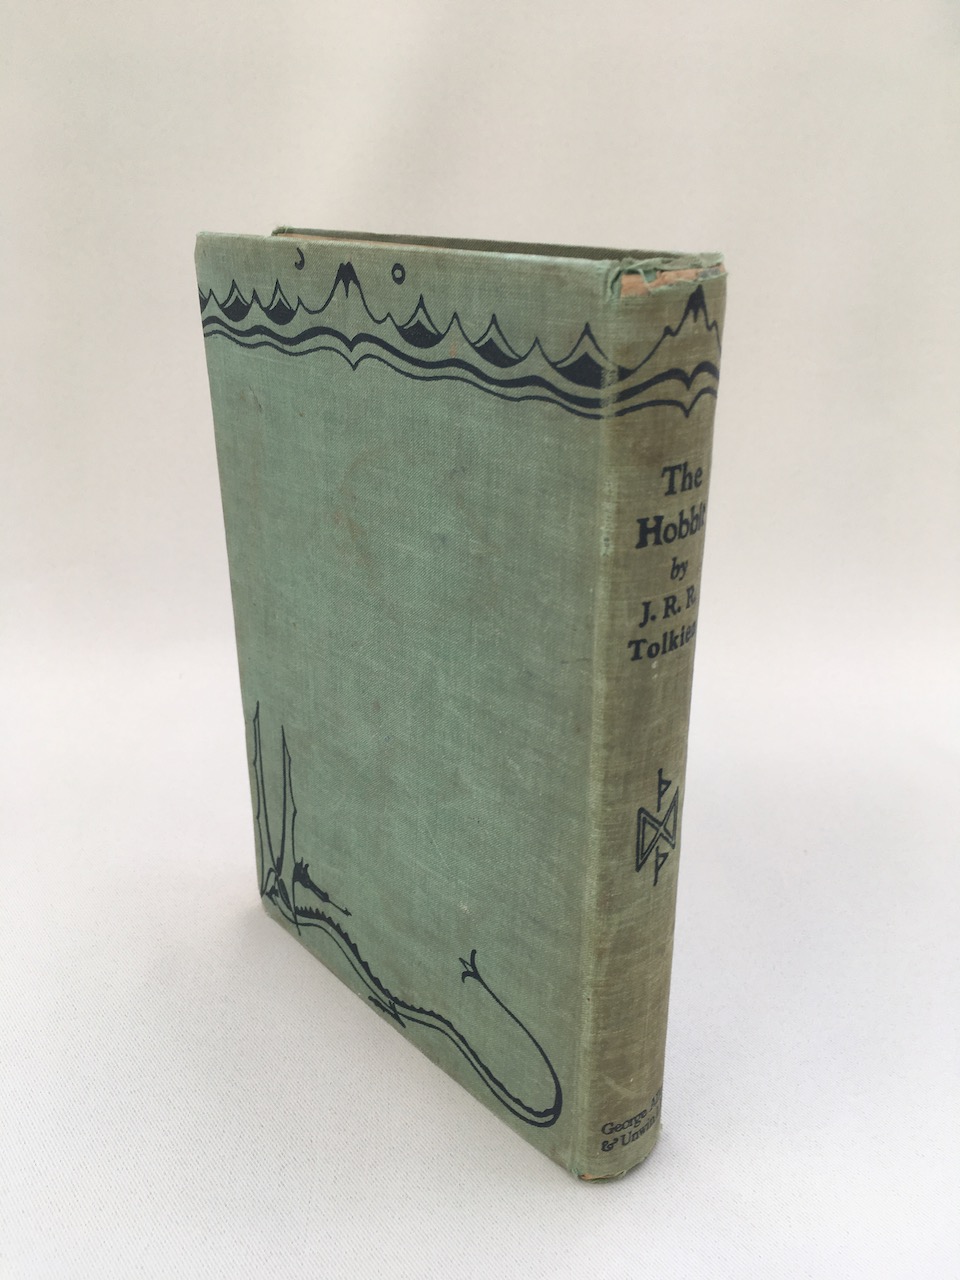 
The Hobbit, George Allen & Unwin, 1937 1st UK Edition 2nd impression 6